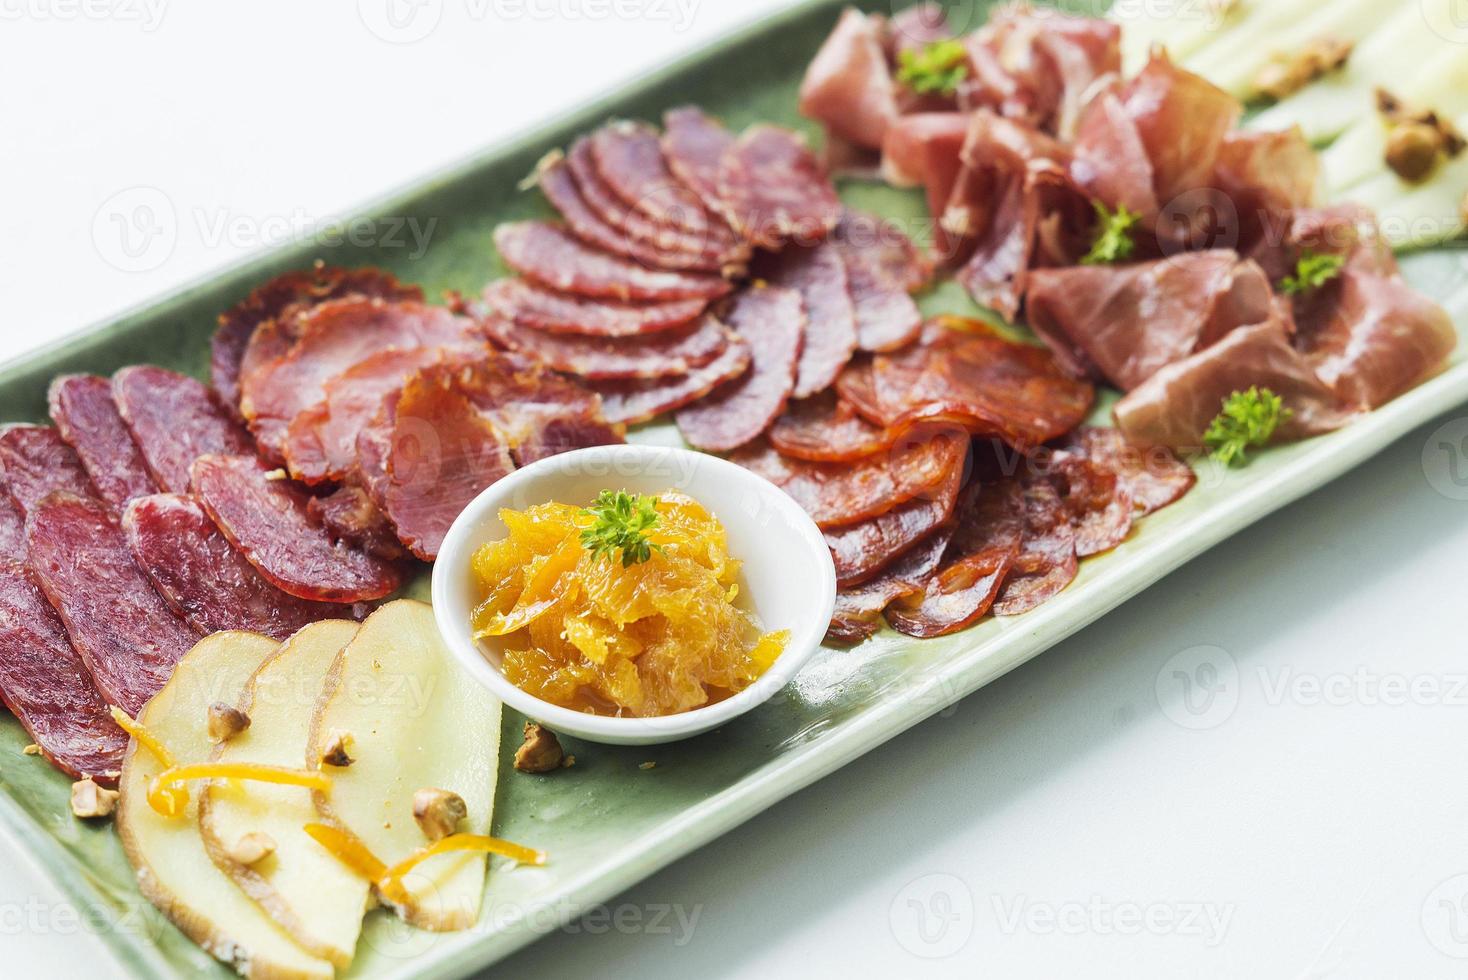 Spanish serrano ham chorizo sausage smoked meats cheese tapas sharing platter set with bread photo